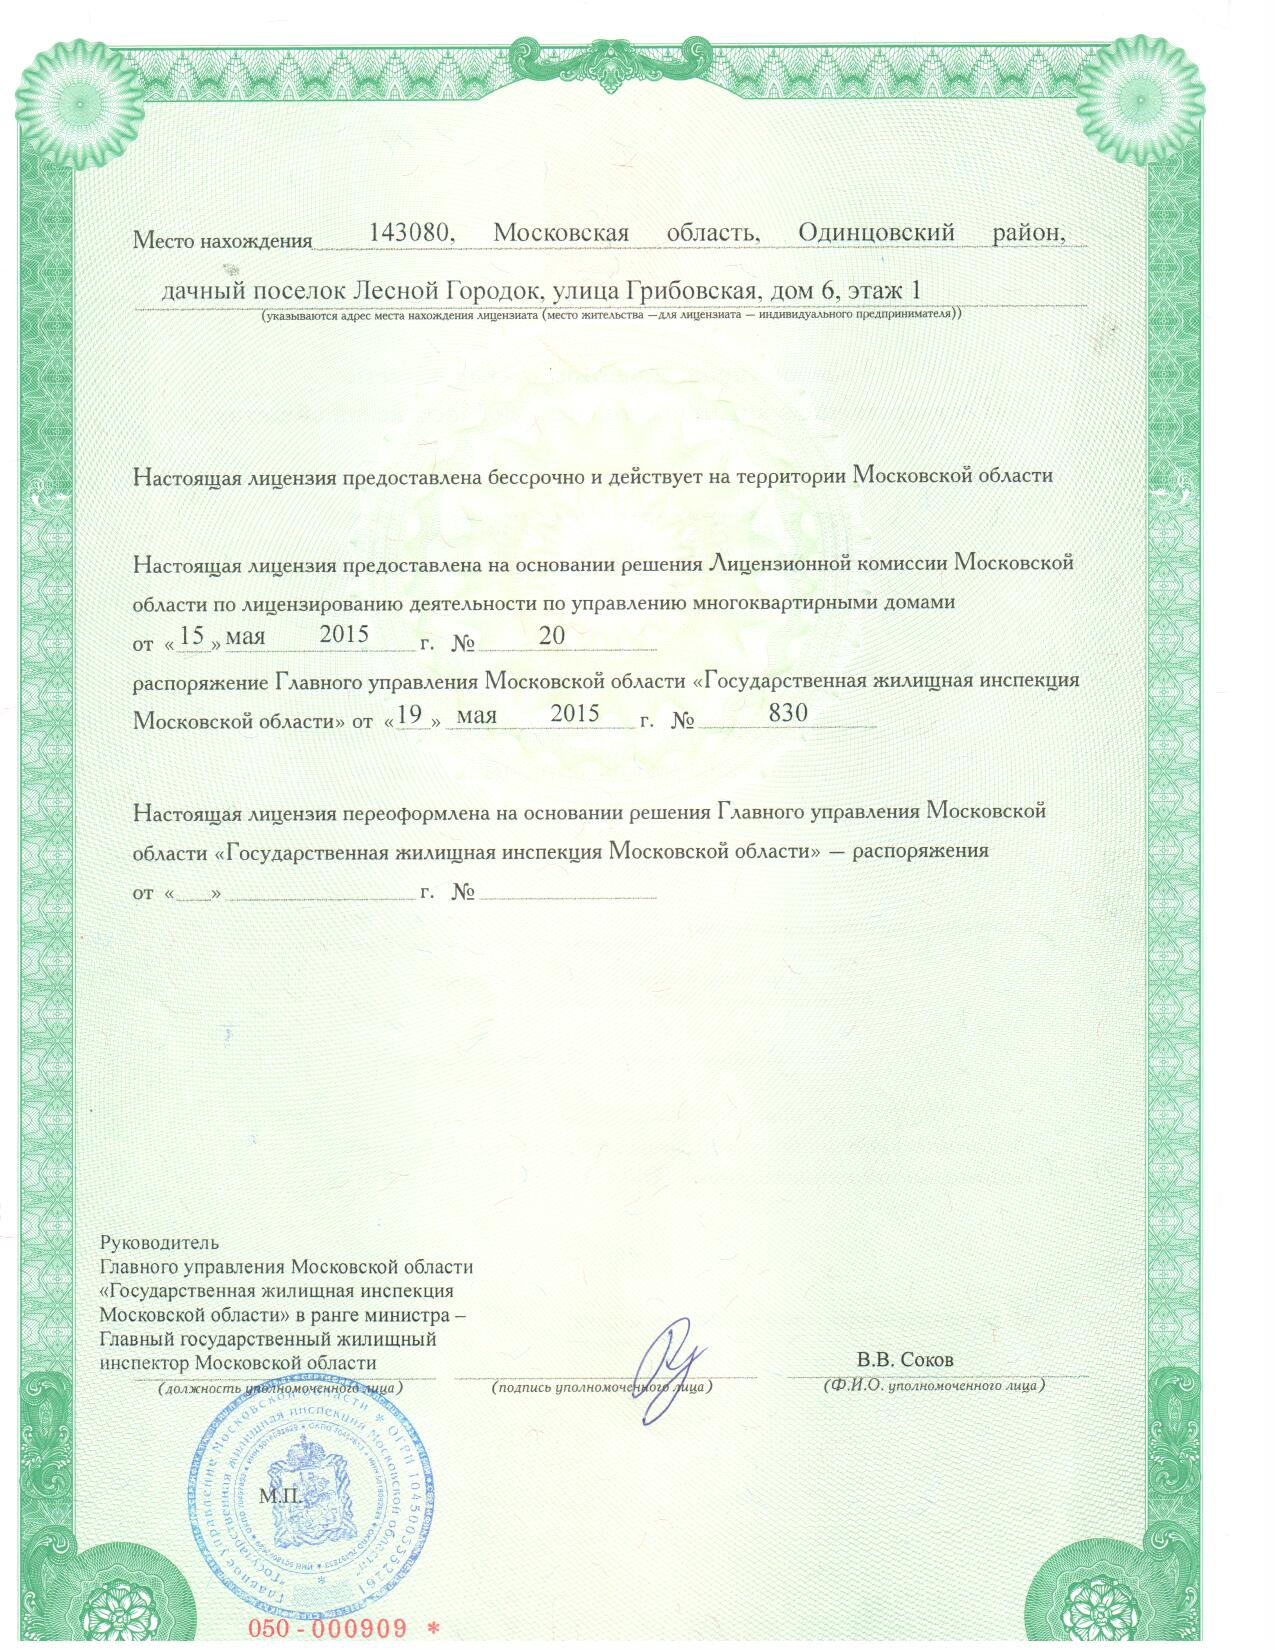 Лицензия на управление МКД №666 от 19.05.2015